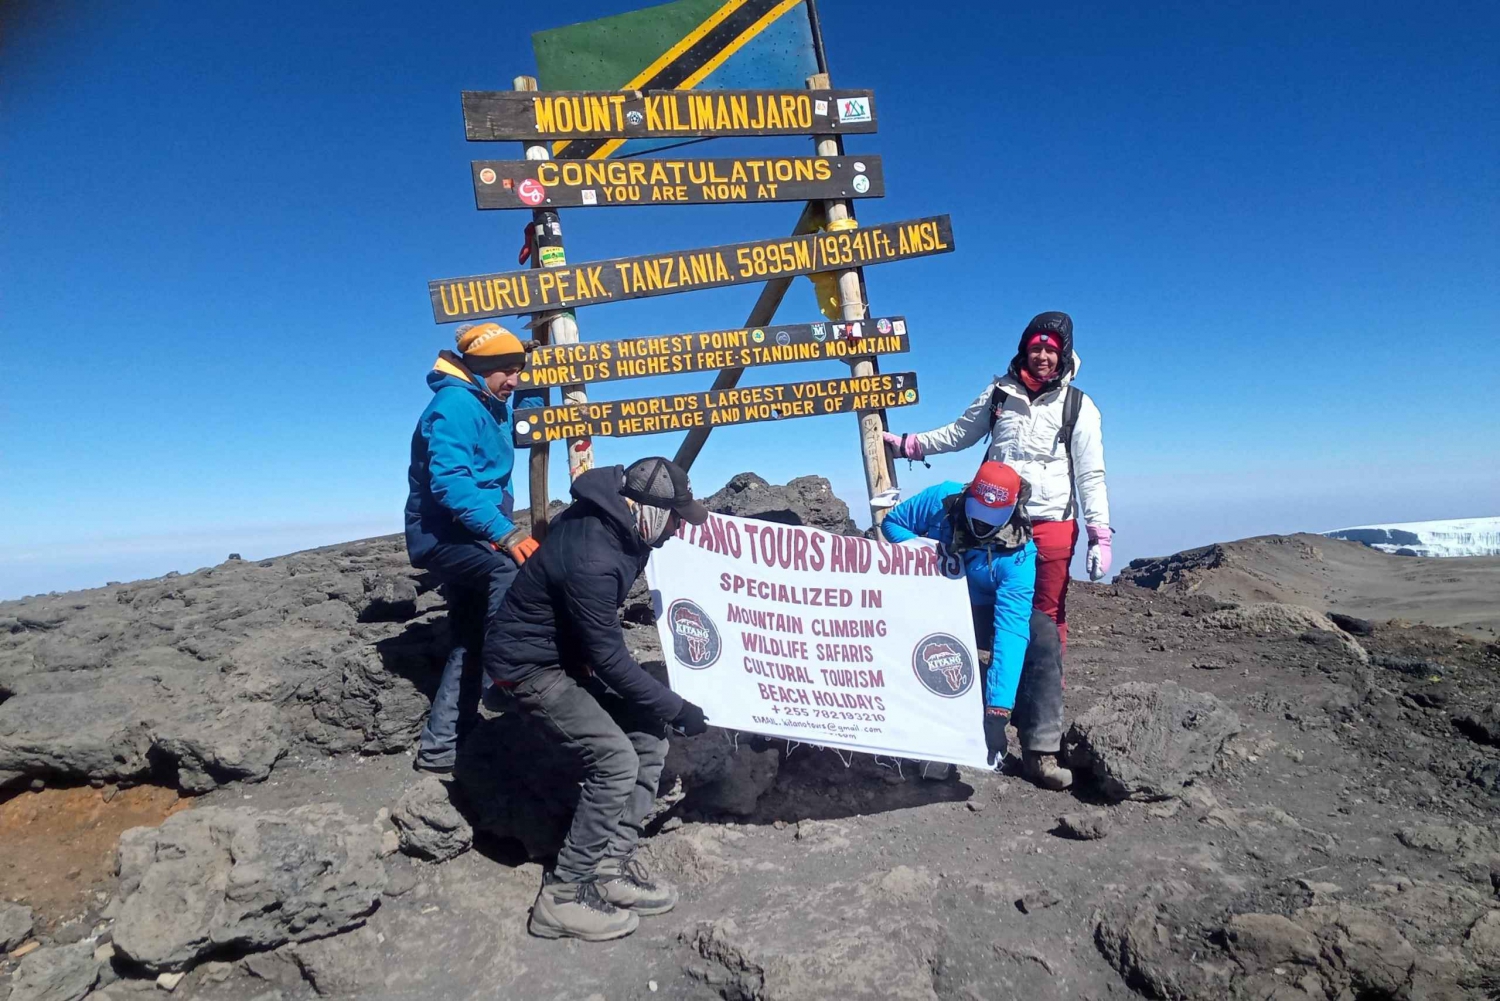 5 dagar i grupp på Kilimanjaro via Marangu-rutten